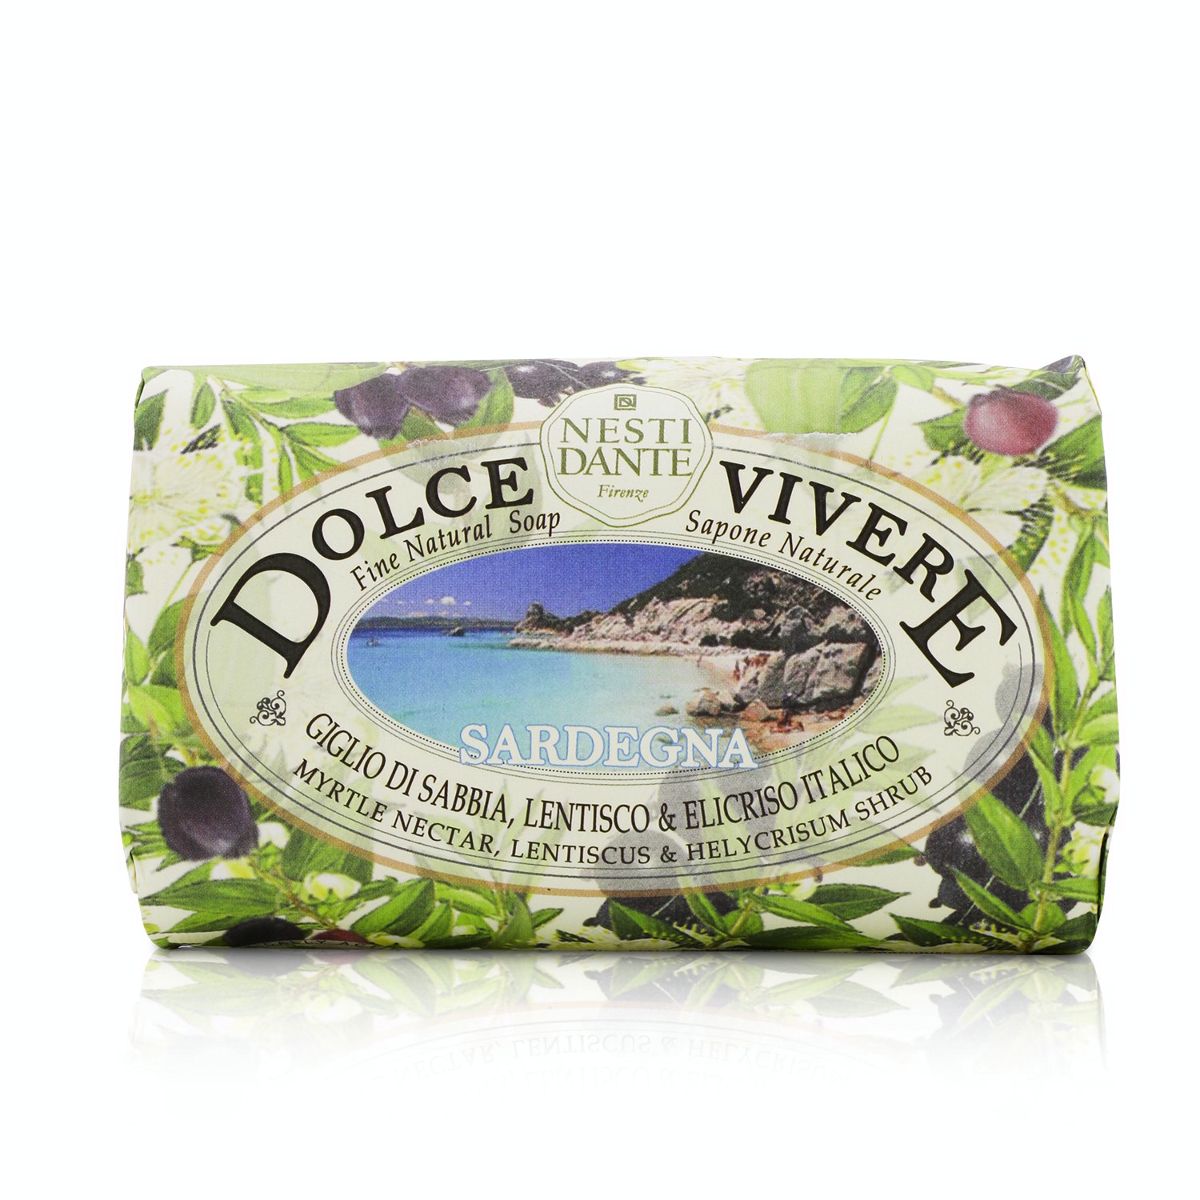 Dolce Vivere Fine Natural Soap - Sardegna - Myrtle Nectar Lentiscus  Helycrisum Shrub Nesti Dante Image